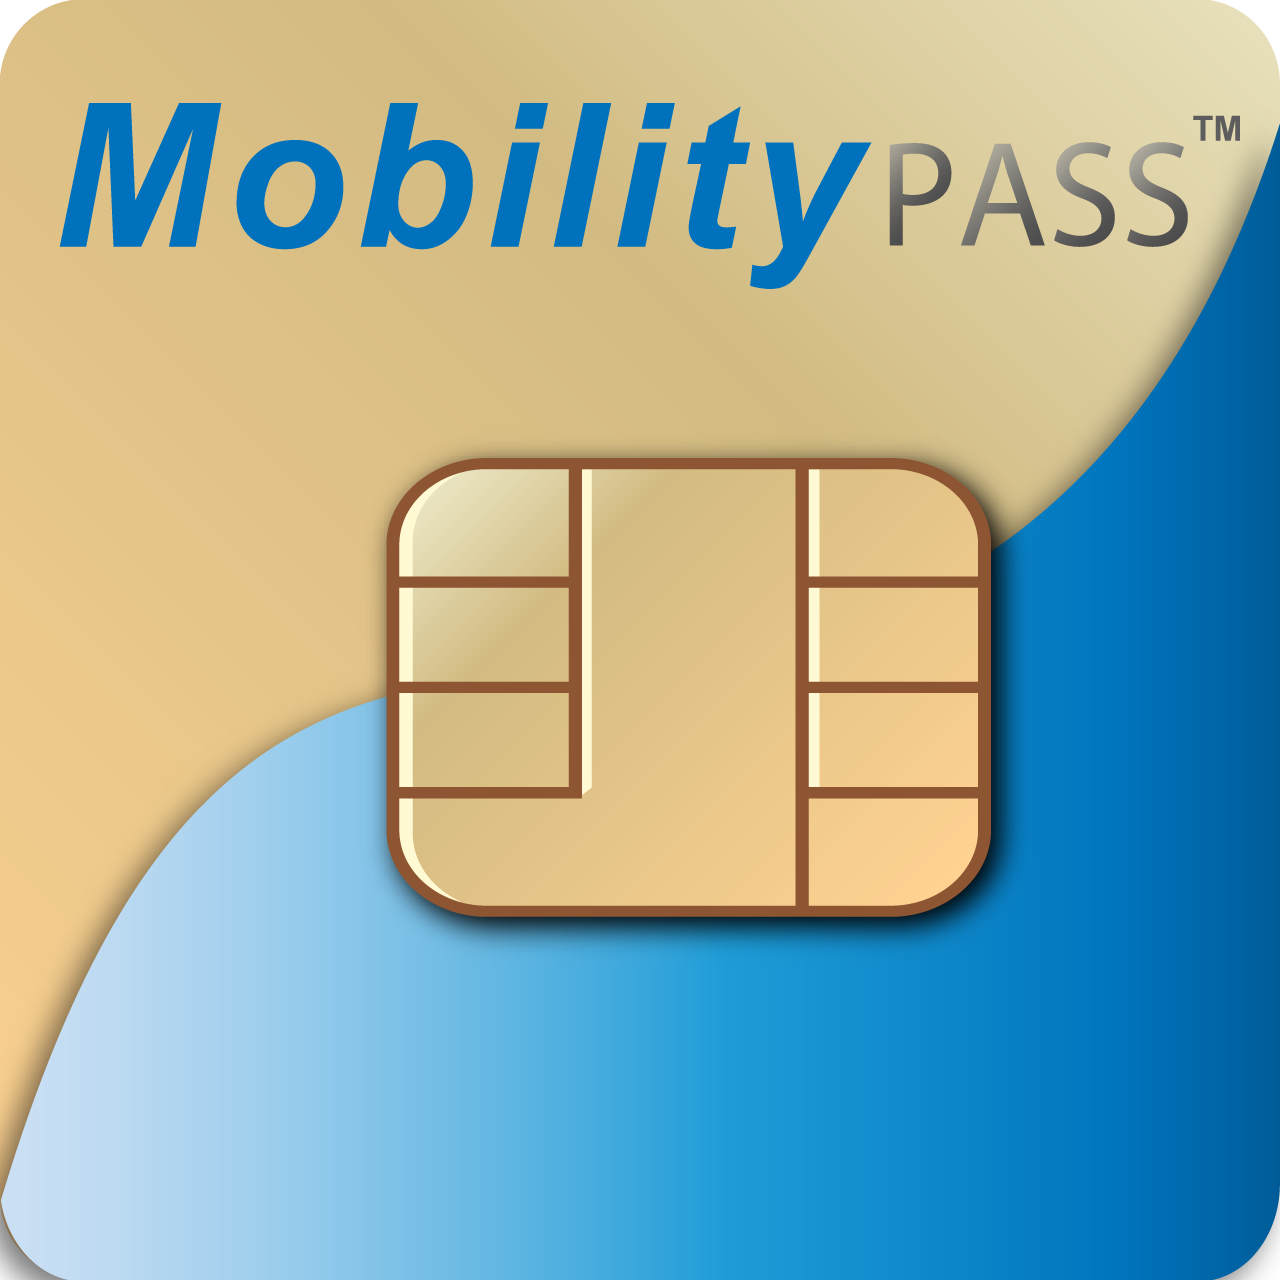 MobilityPass Worldwide official web